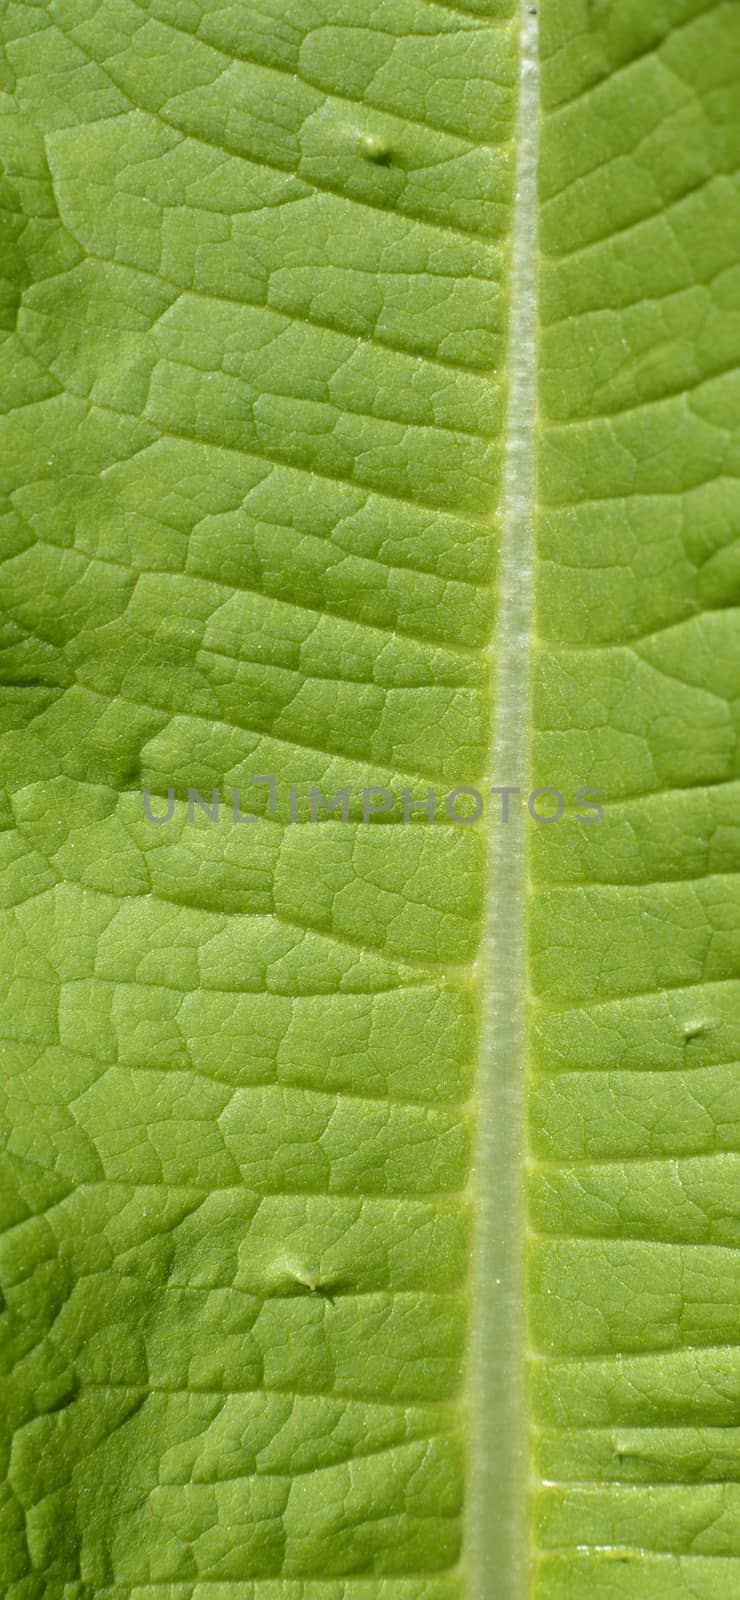 Green Leaf Macro View On Veins by fstockluk